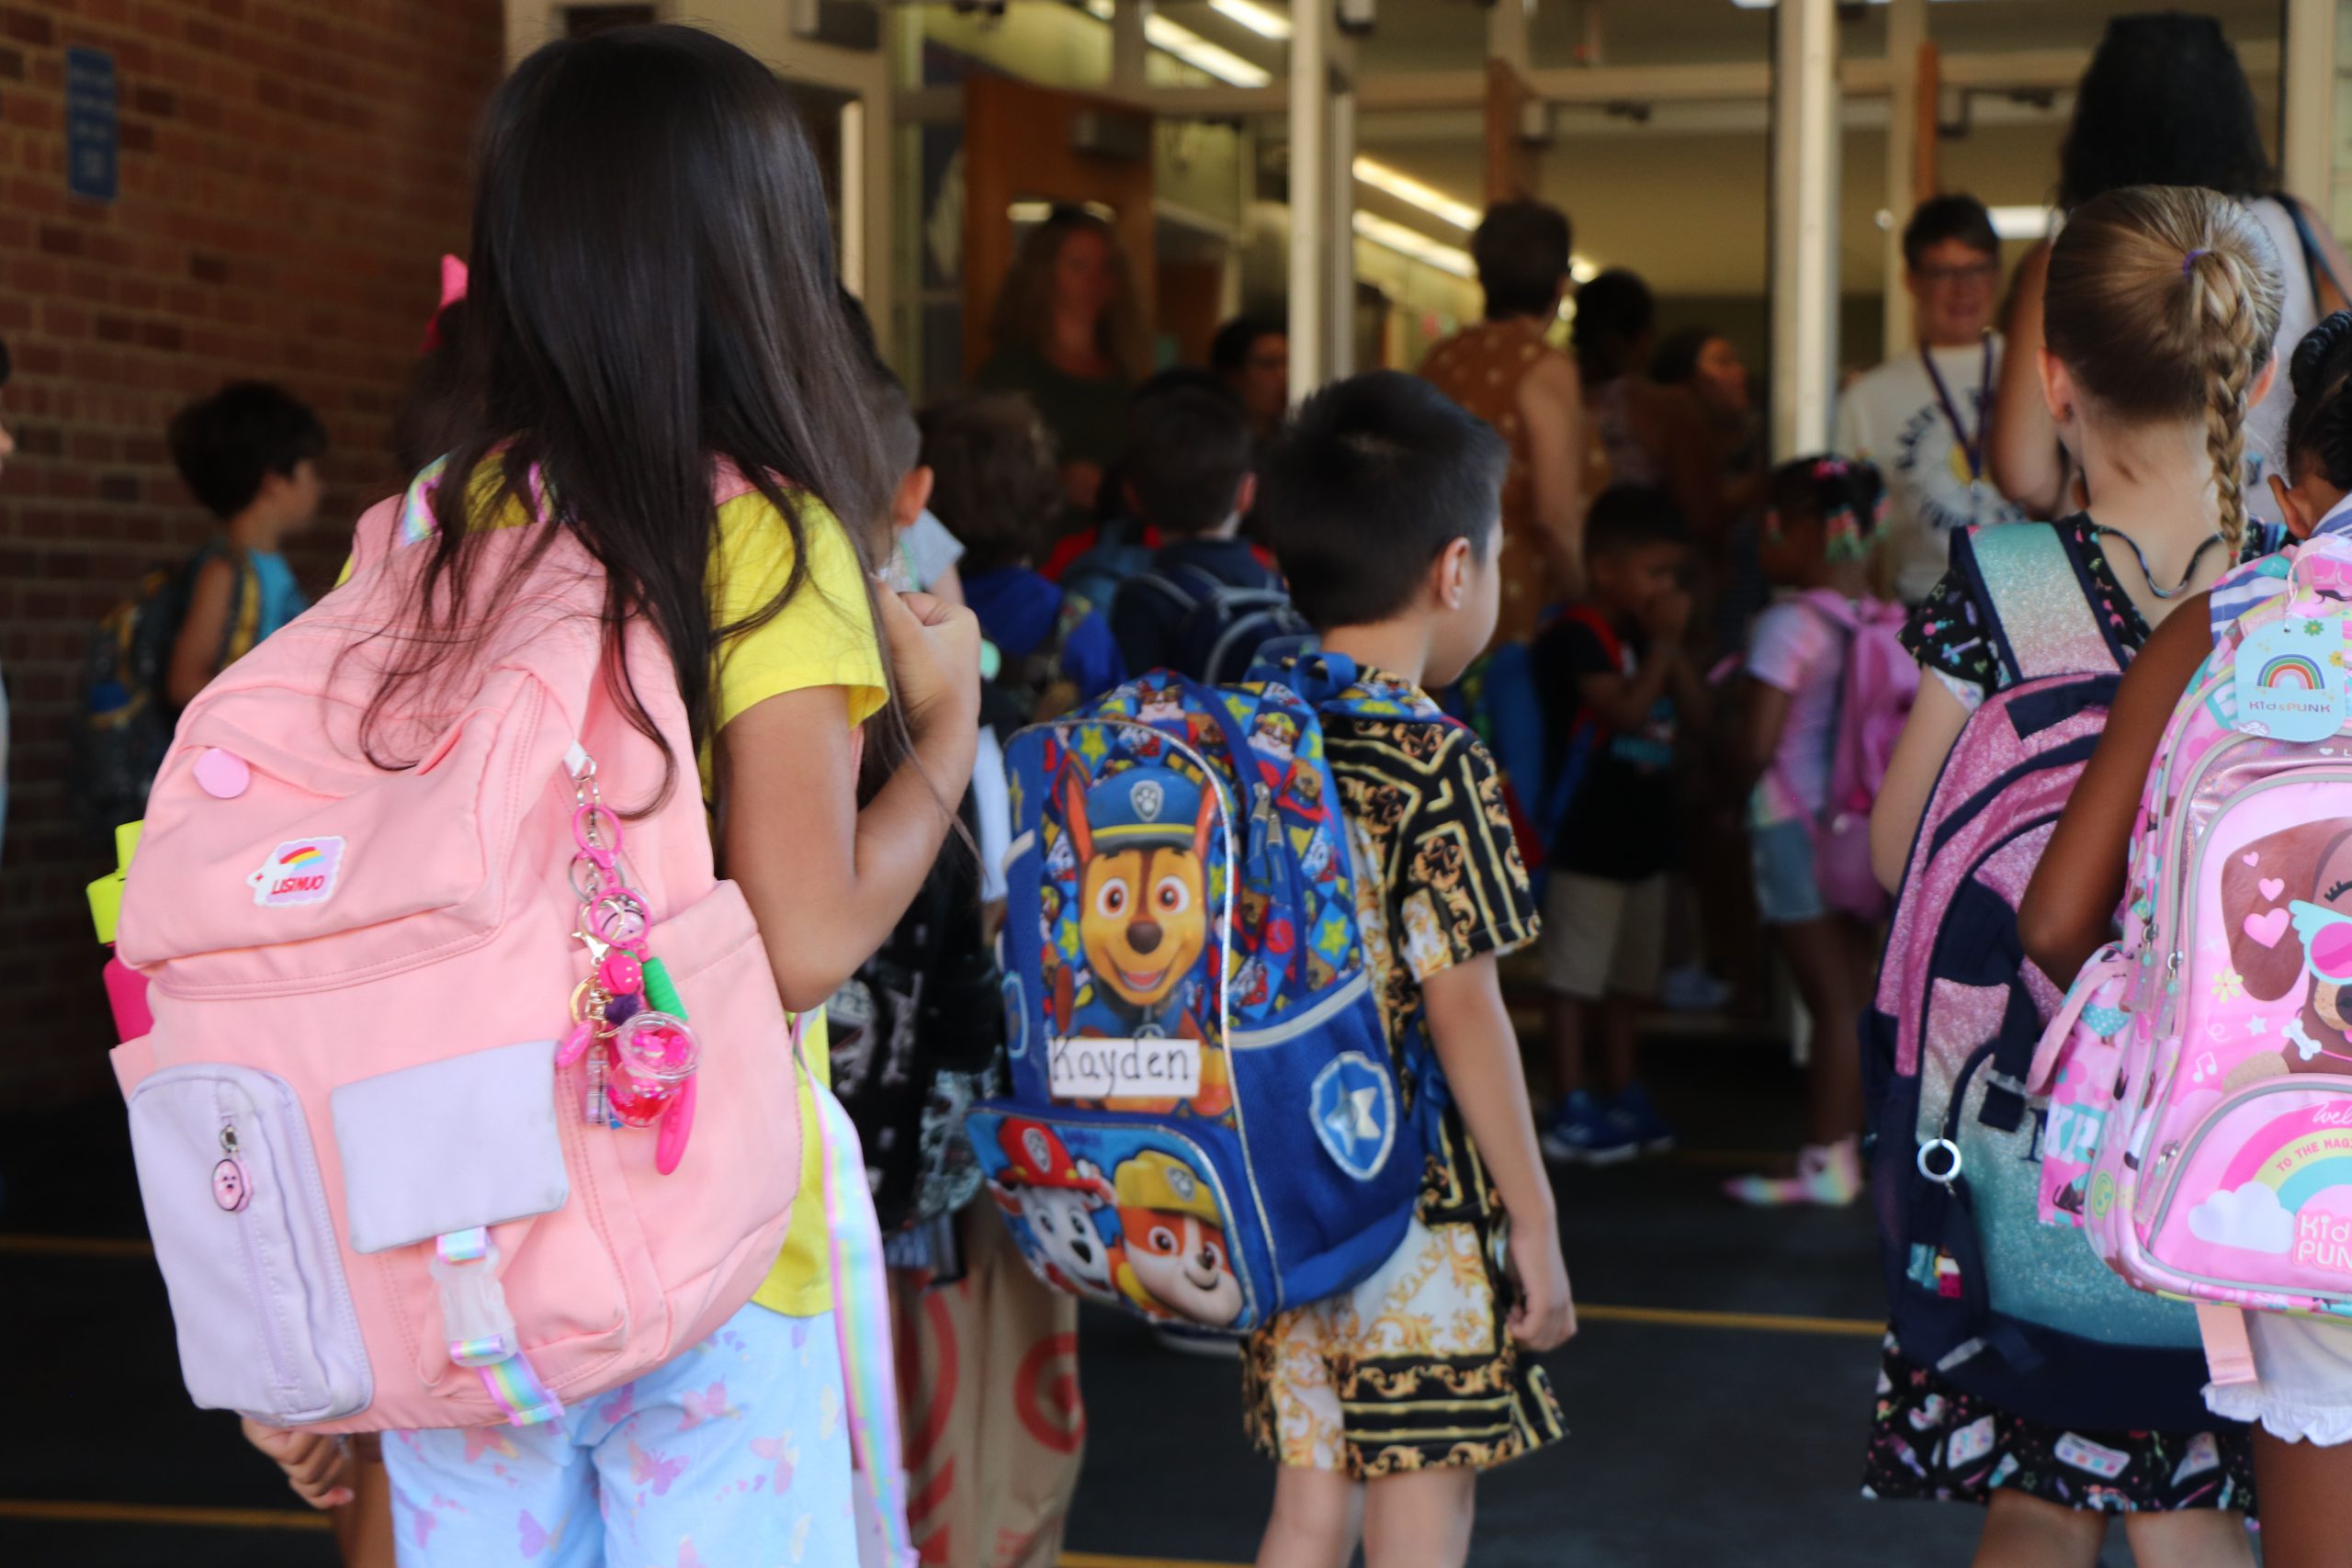 Children with backpacks walk toward a school building entrance.